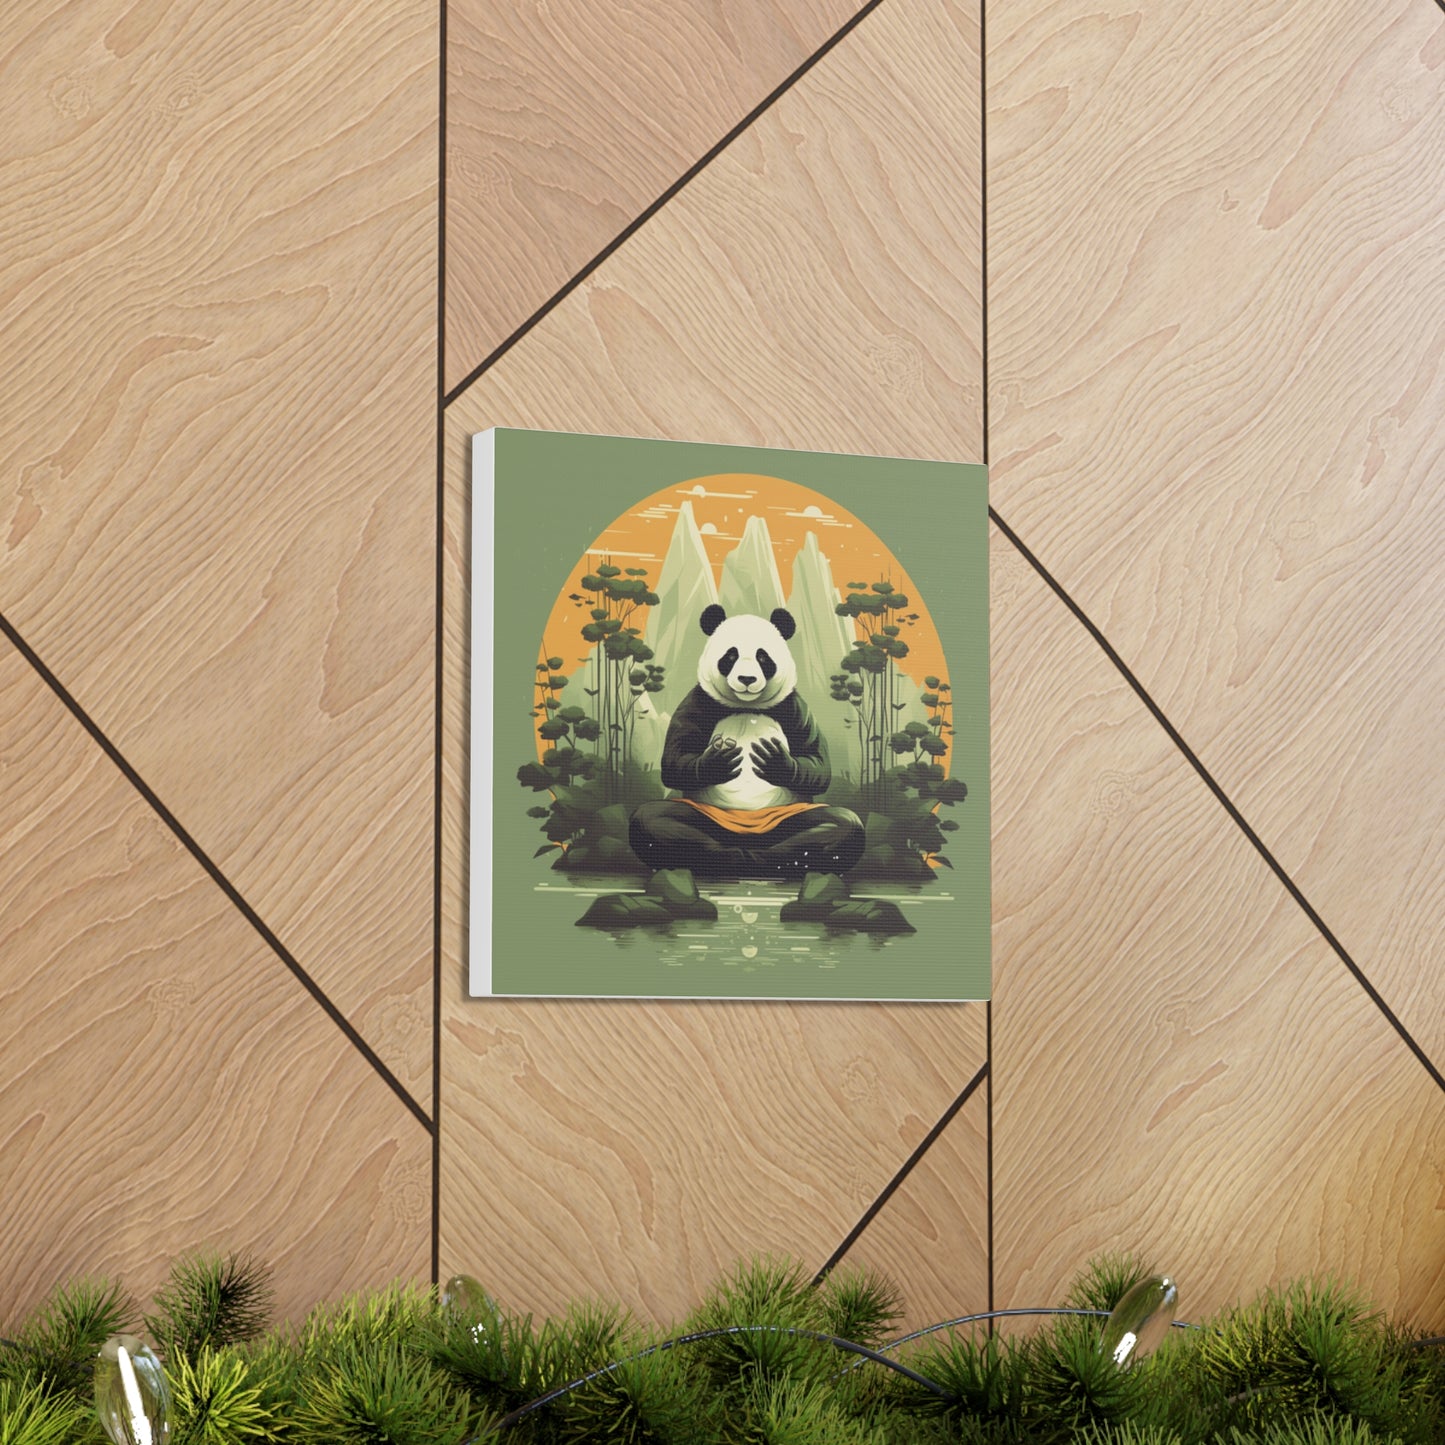 Panda Wall Art with Panda Doing Yoga Poses